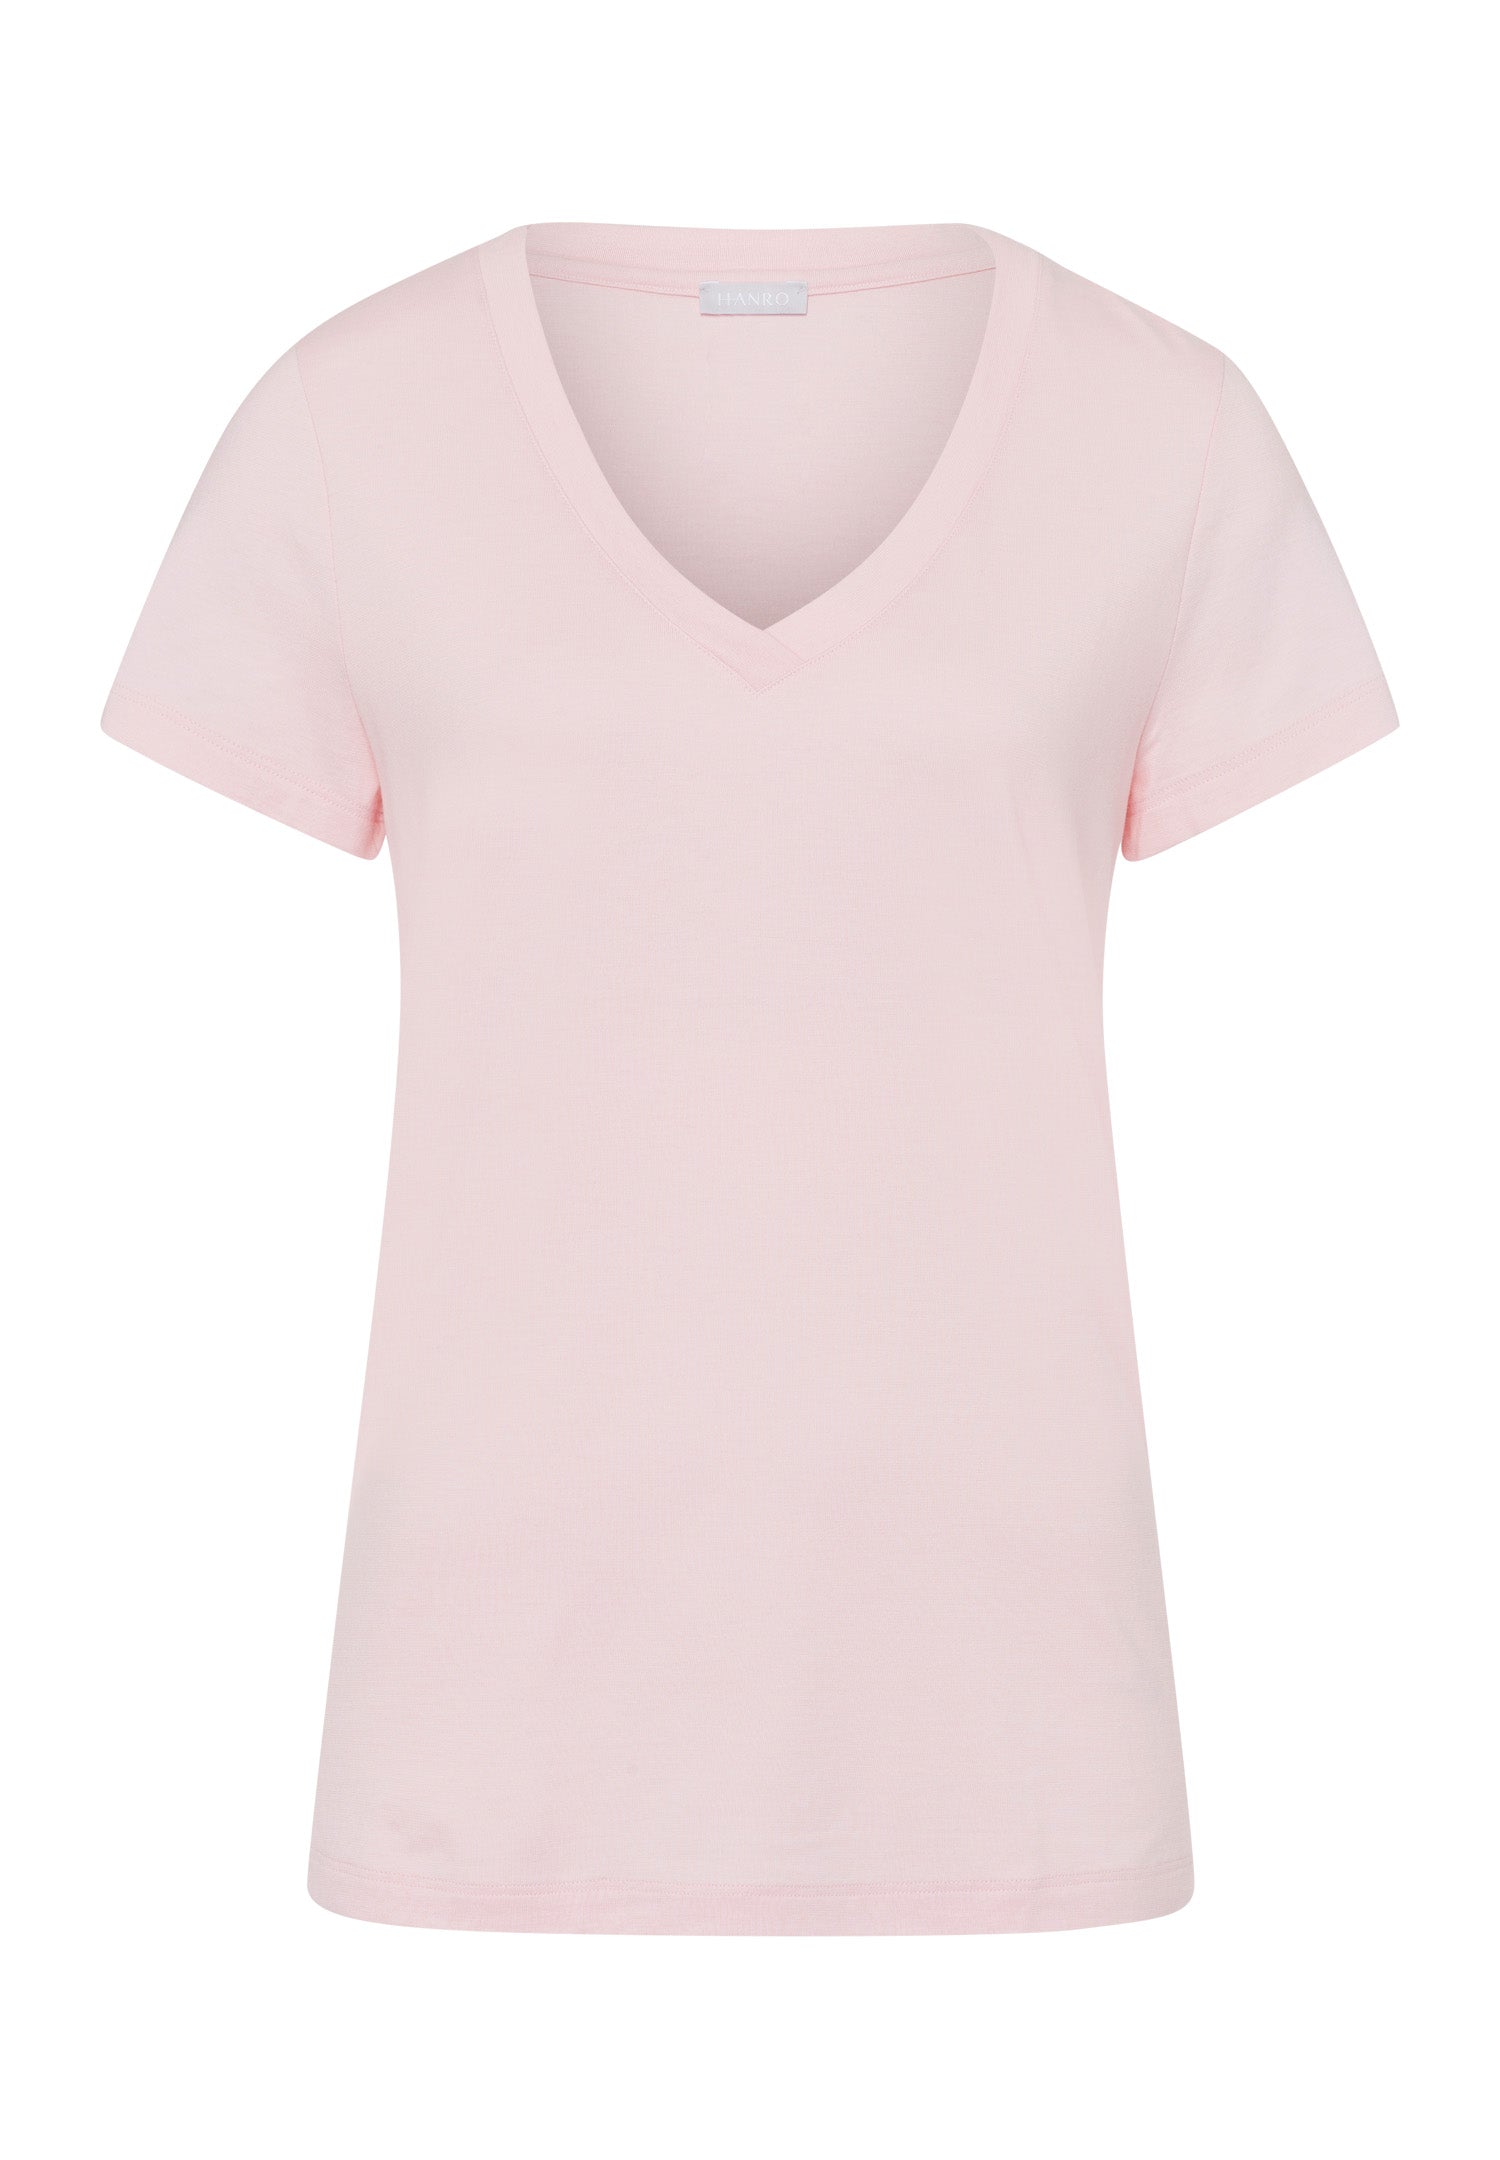 77876 Sleep And Lounge Short Sleeve Shirt - 1378 Pink Whip